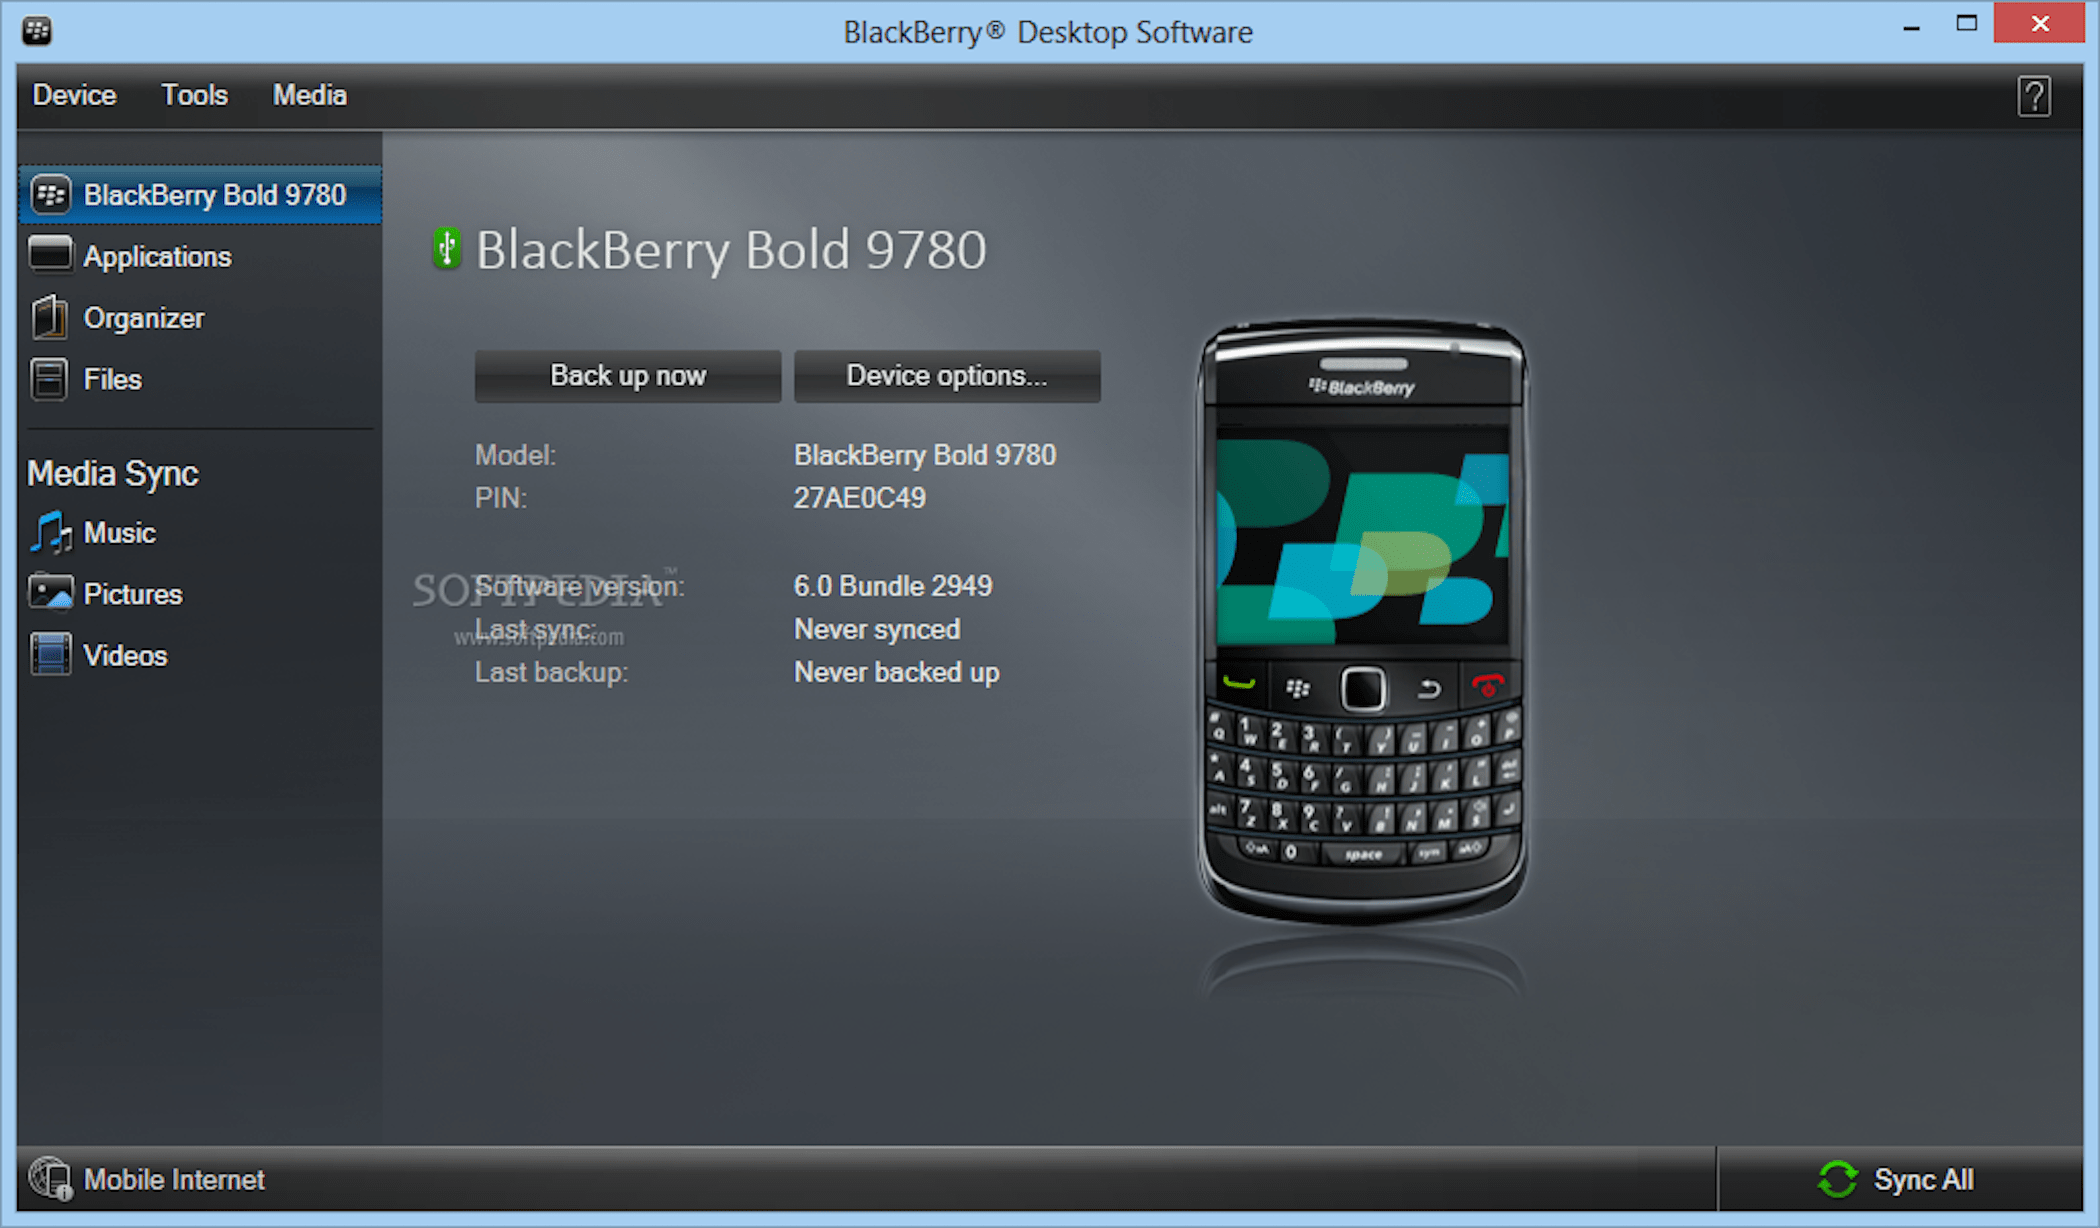 blackberry desktop manager not working in windows 7